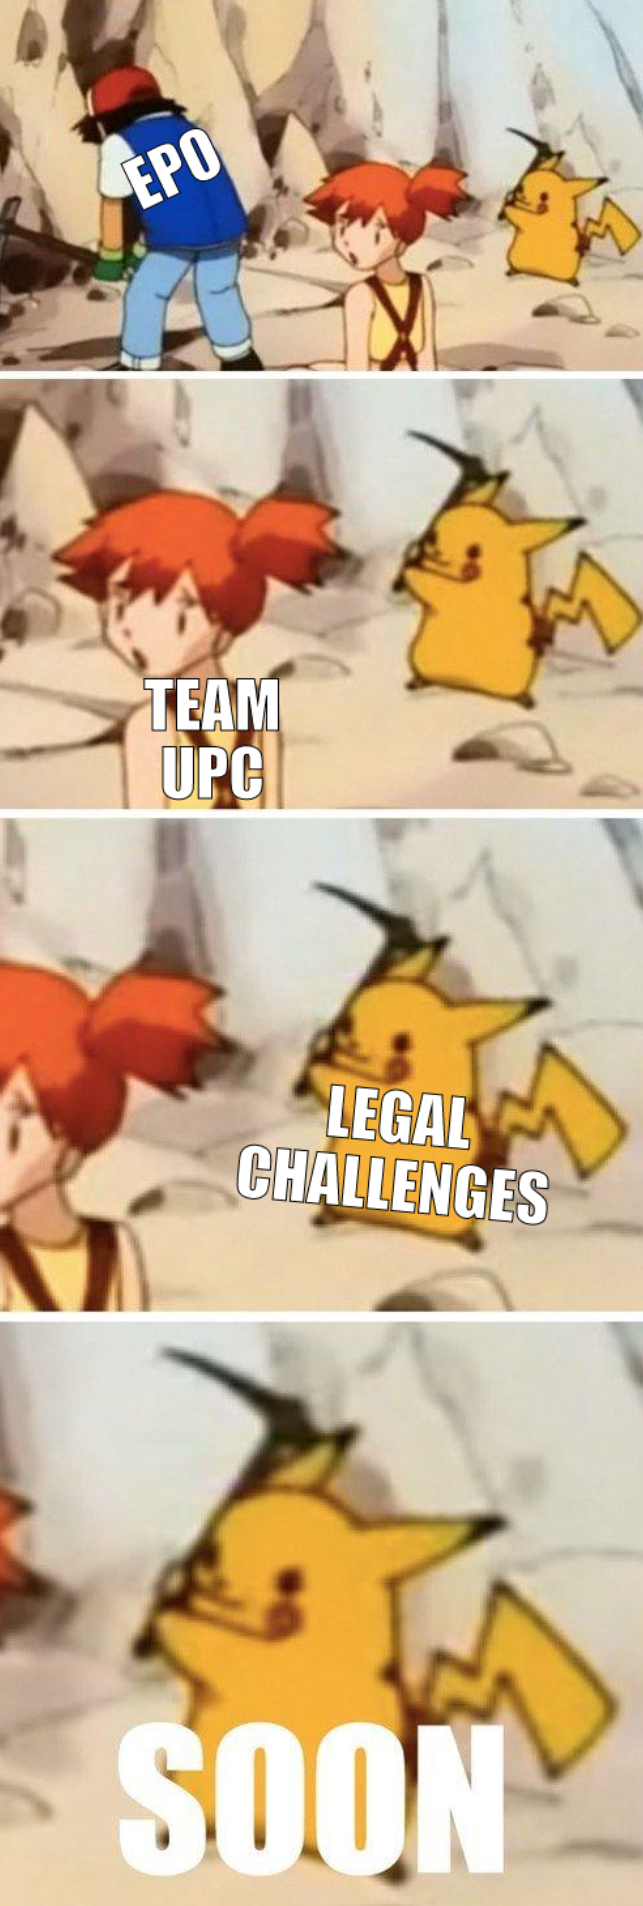 EPO; Team UPC; Legal challenges